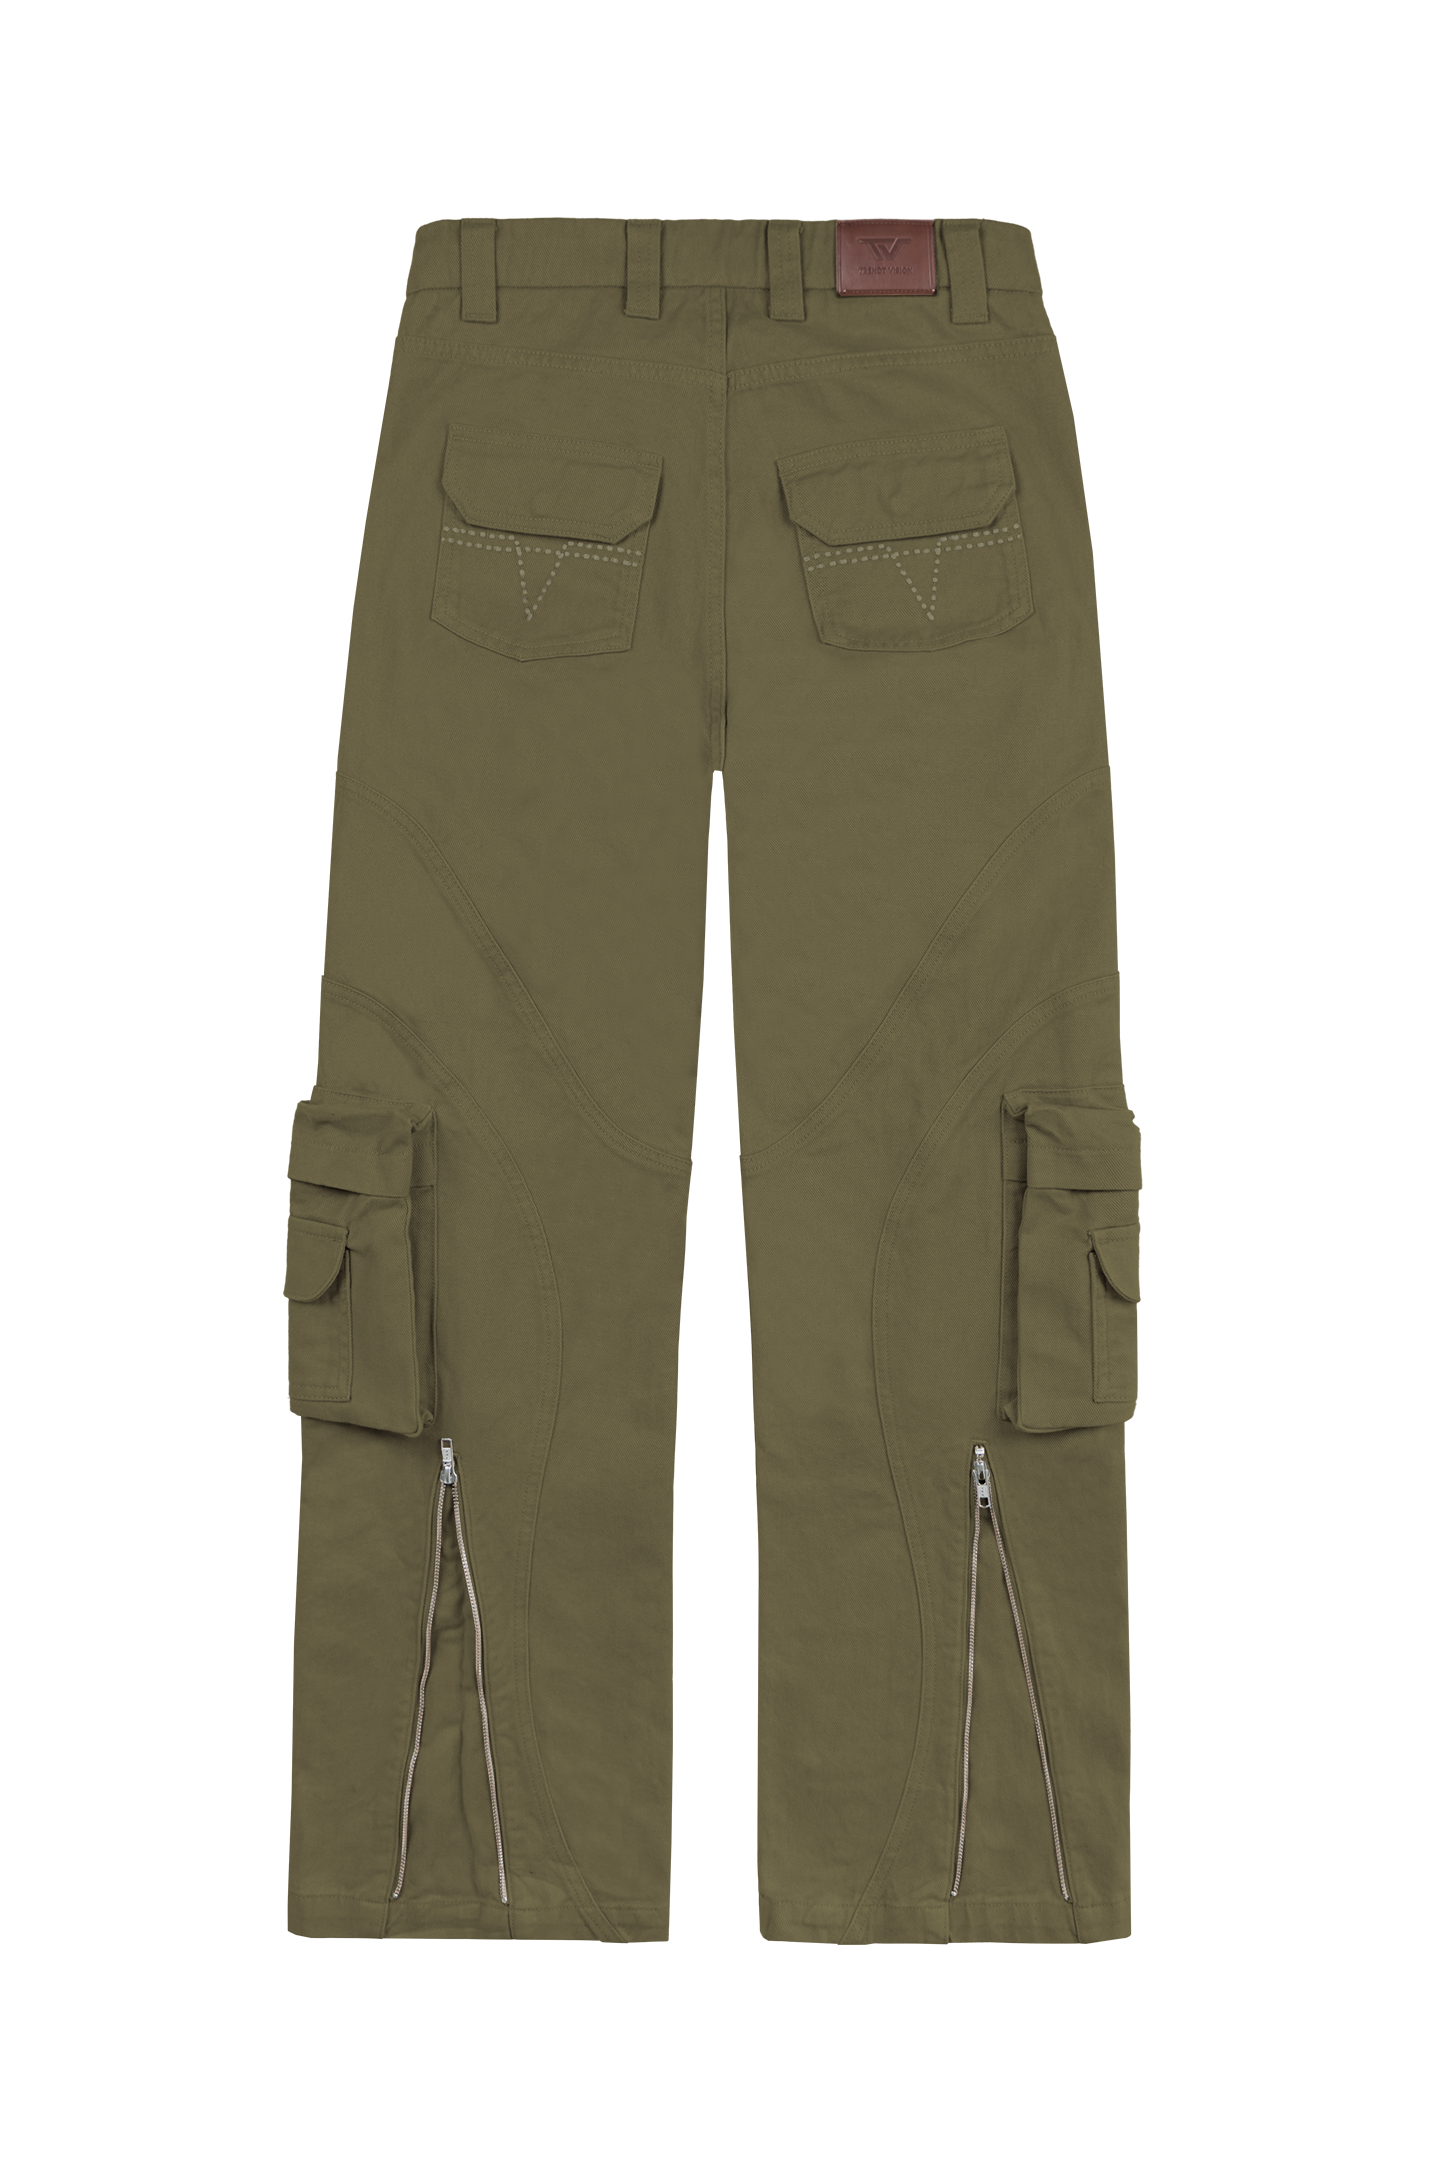 Green Net Cargo Pants 2.0